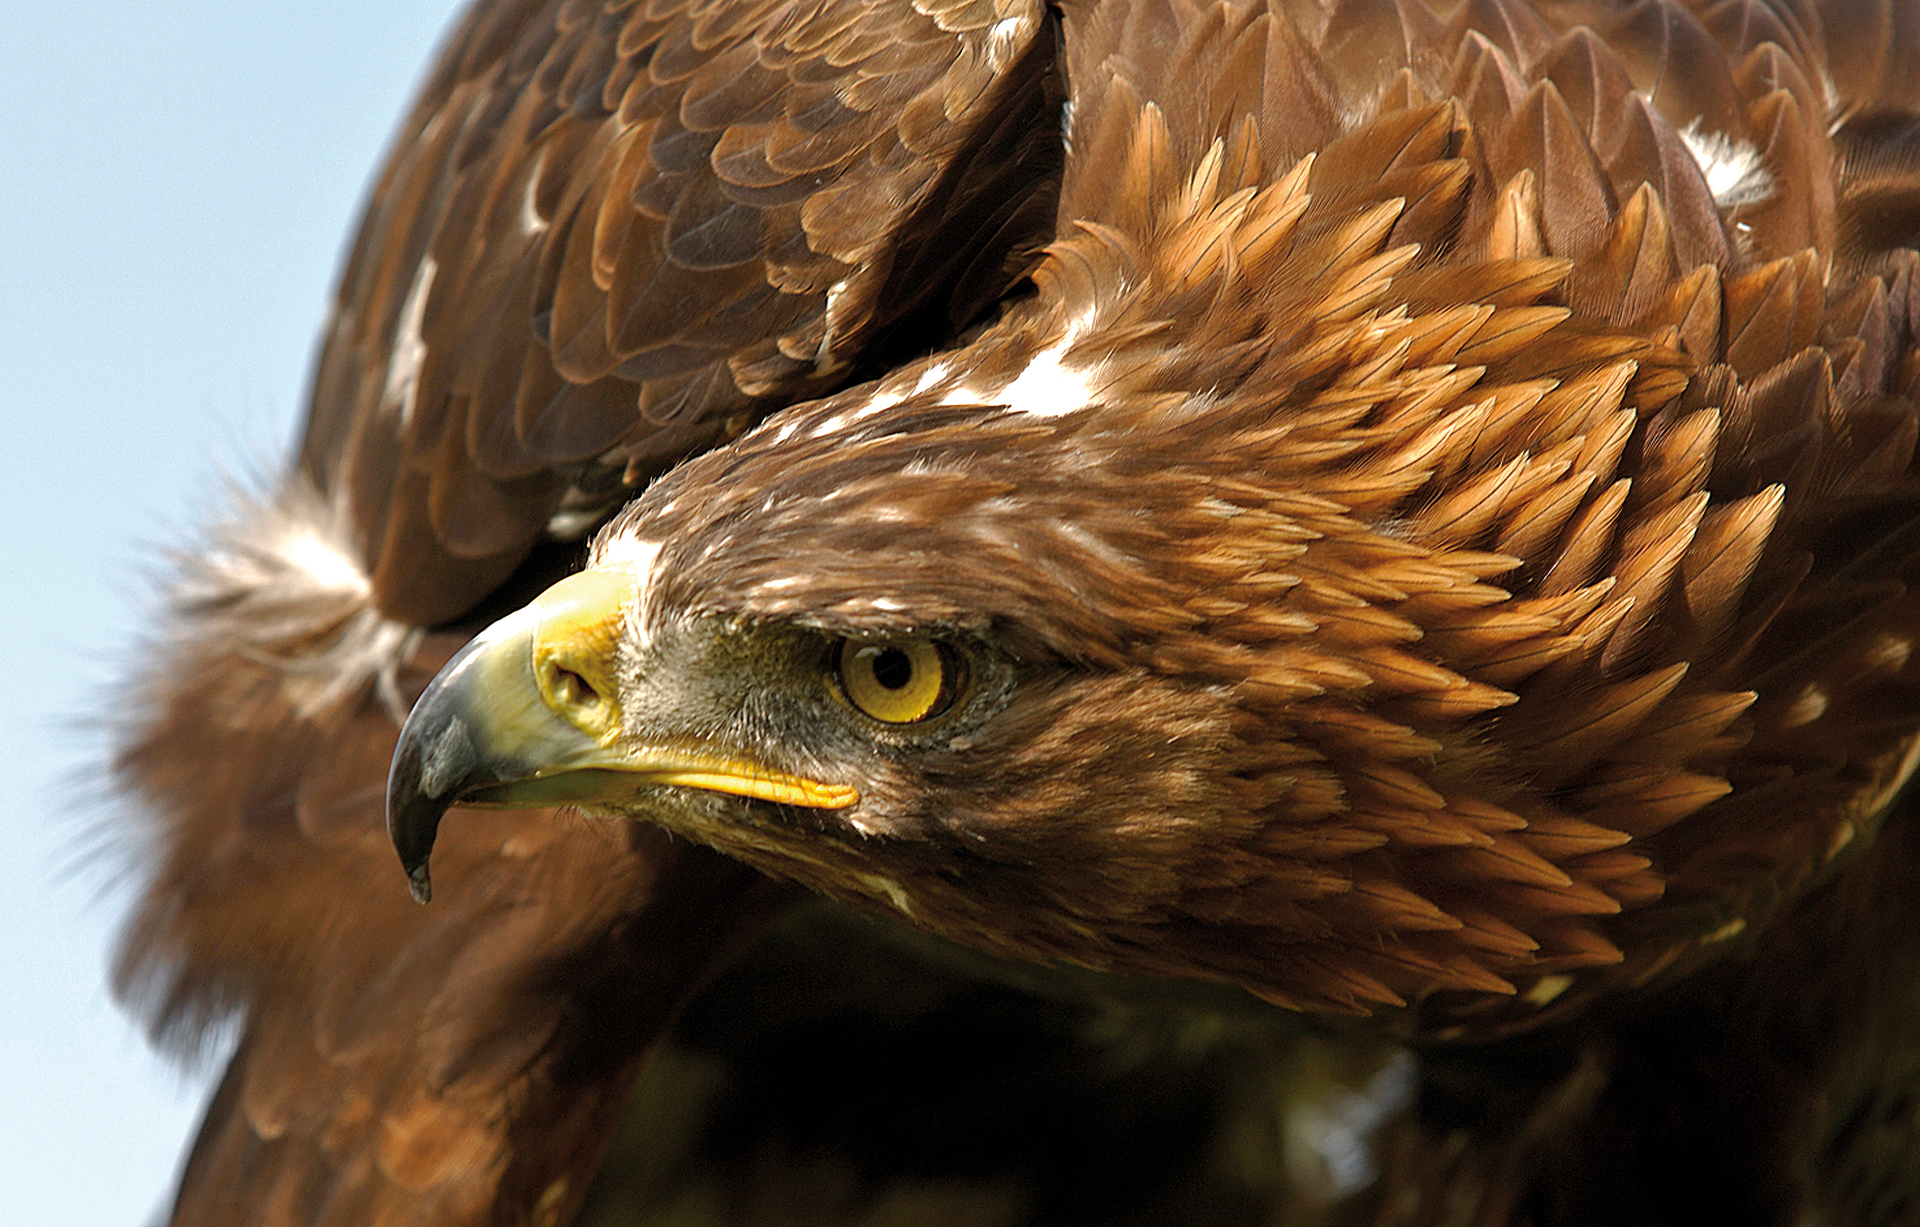 392544 descargar imagen águila real, animales, ave, águila, aves: fondos de pantalla y protectores de pantalla gratis